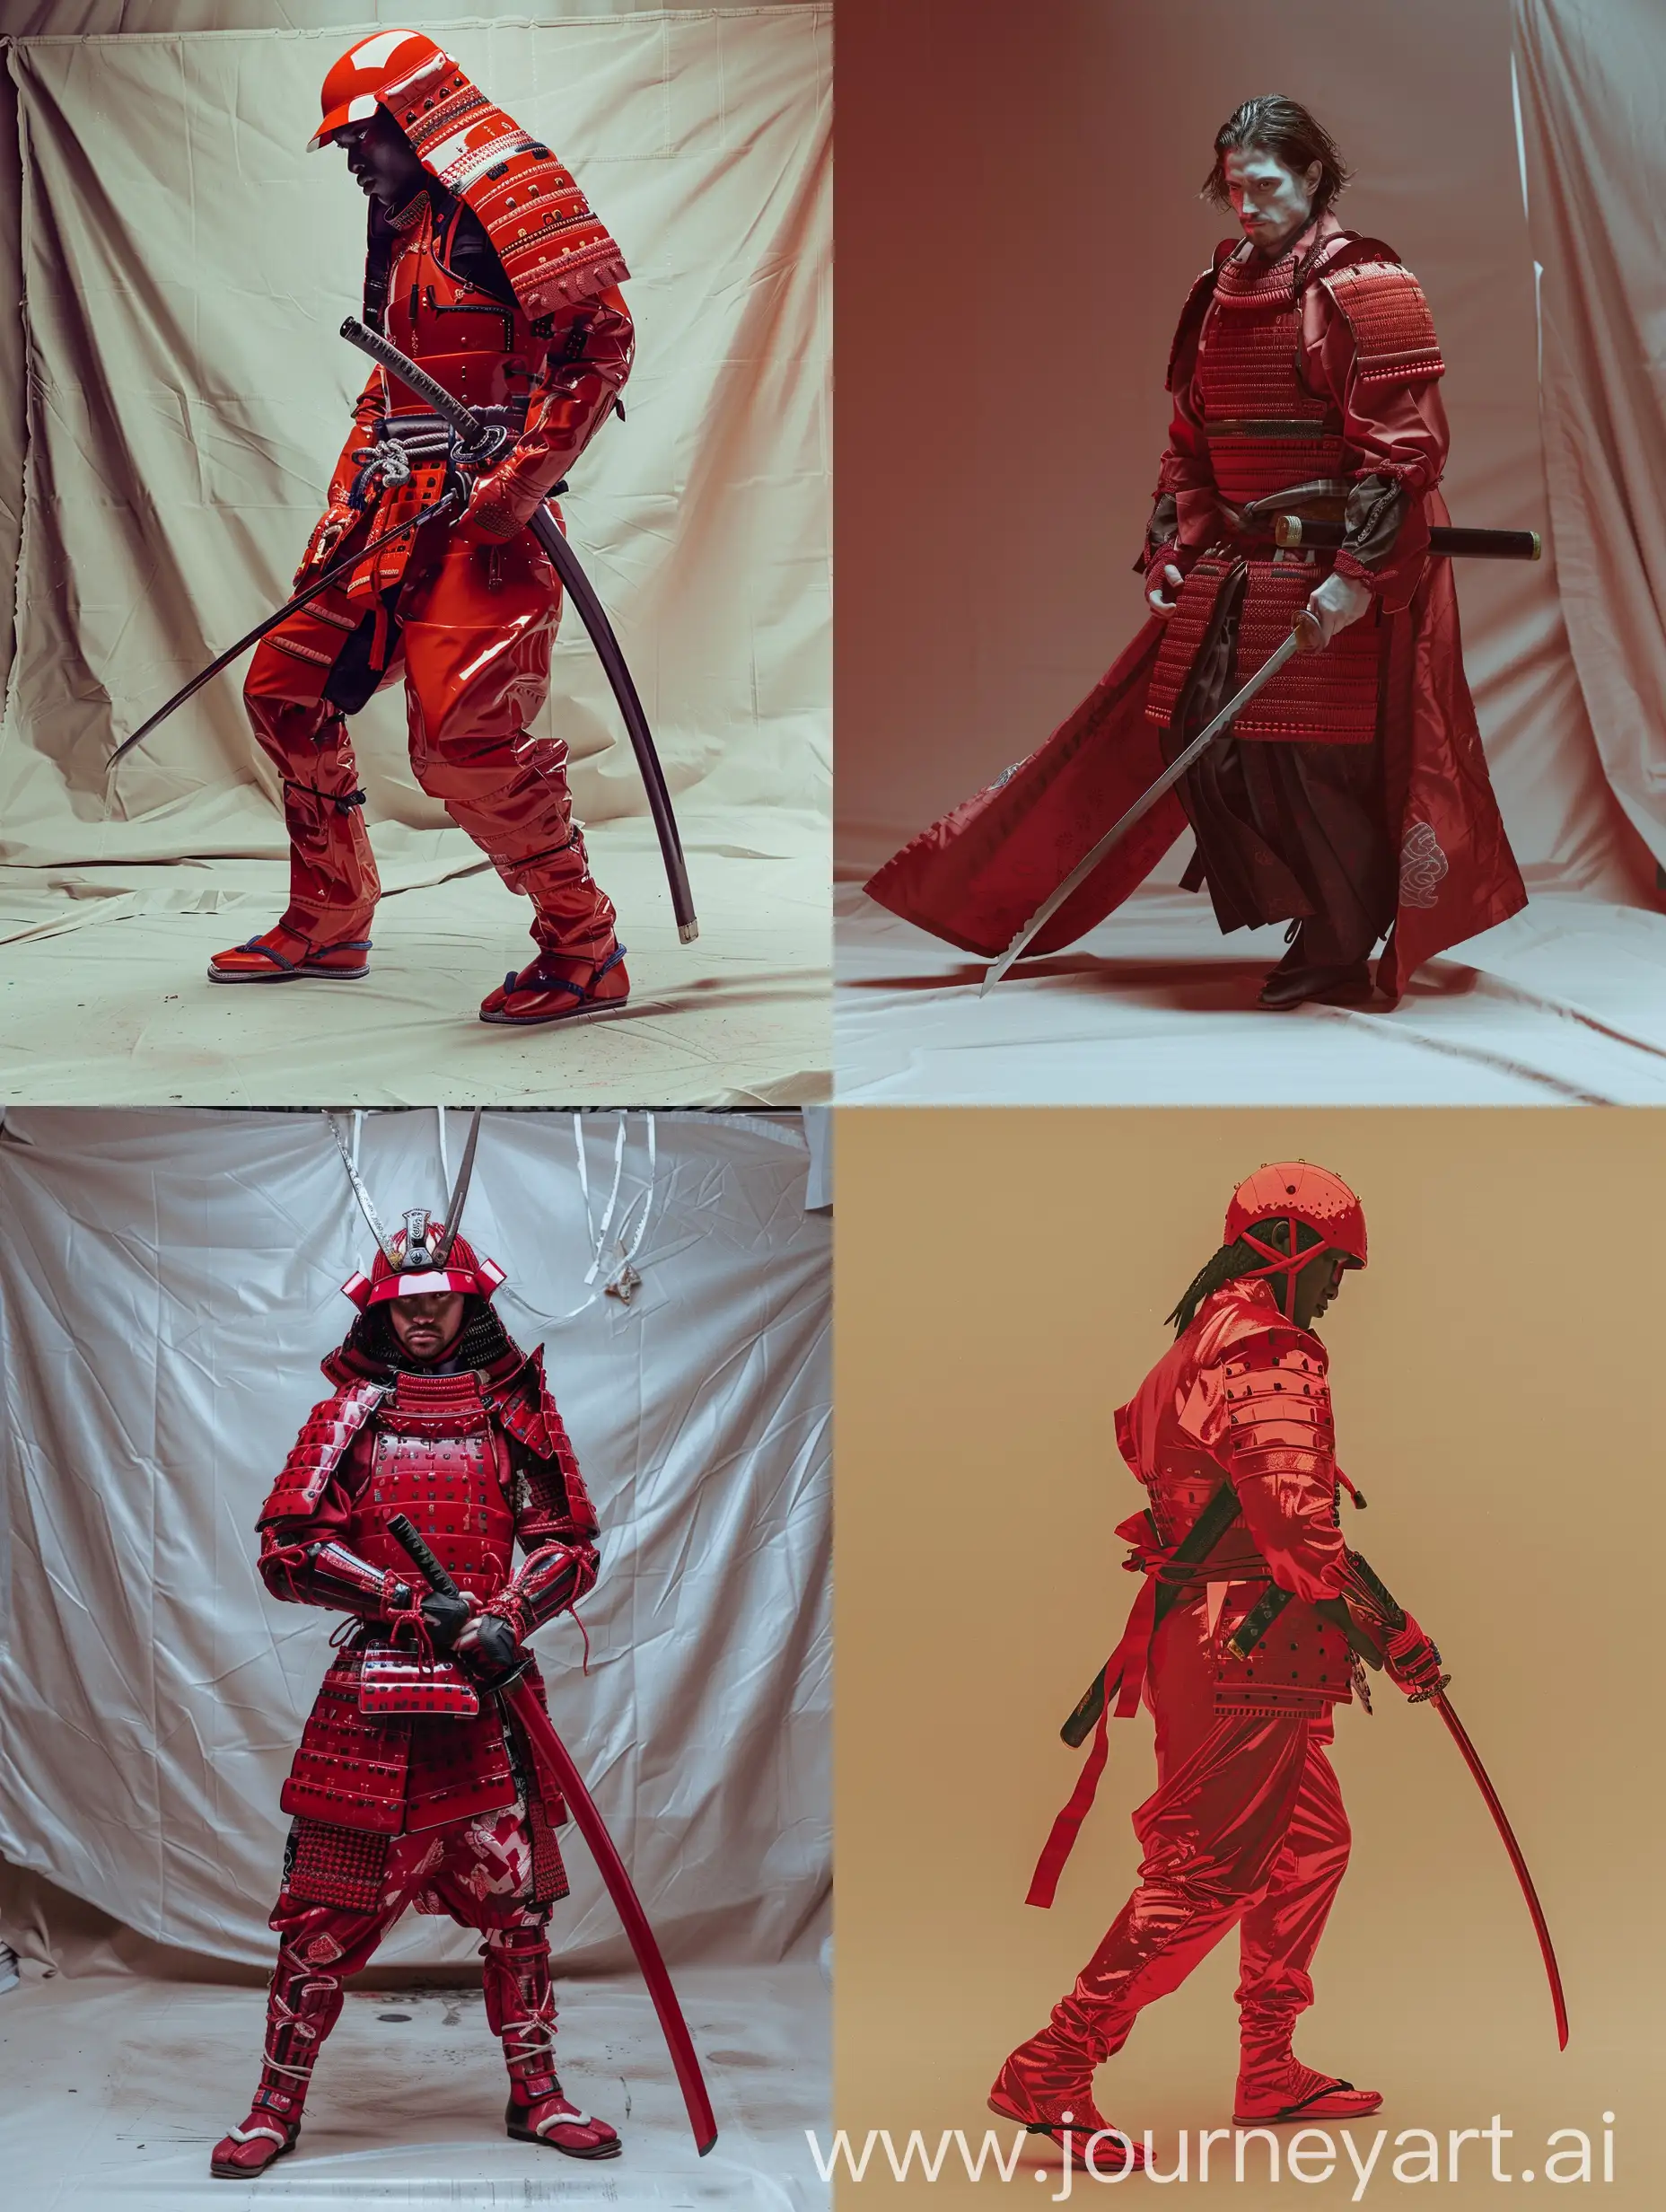 Modern-Urban-Samurai-in-Striking-Red-Armor